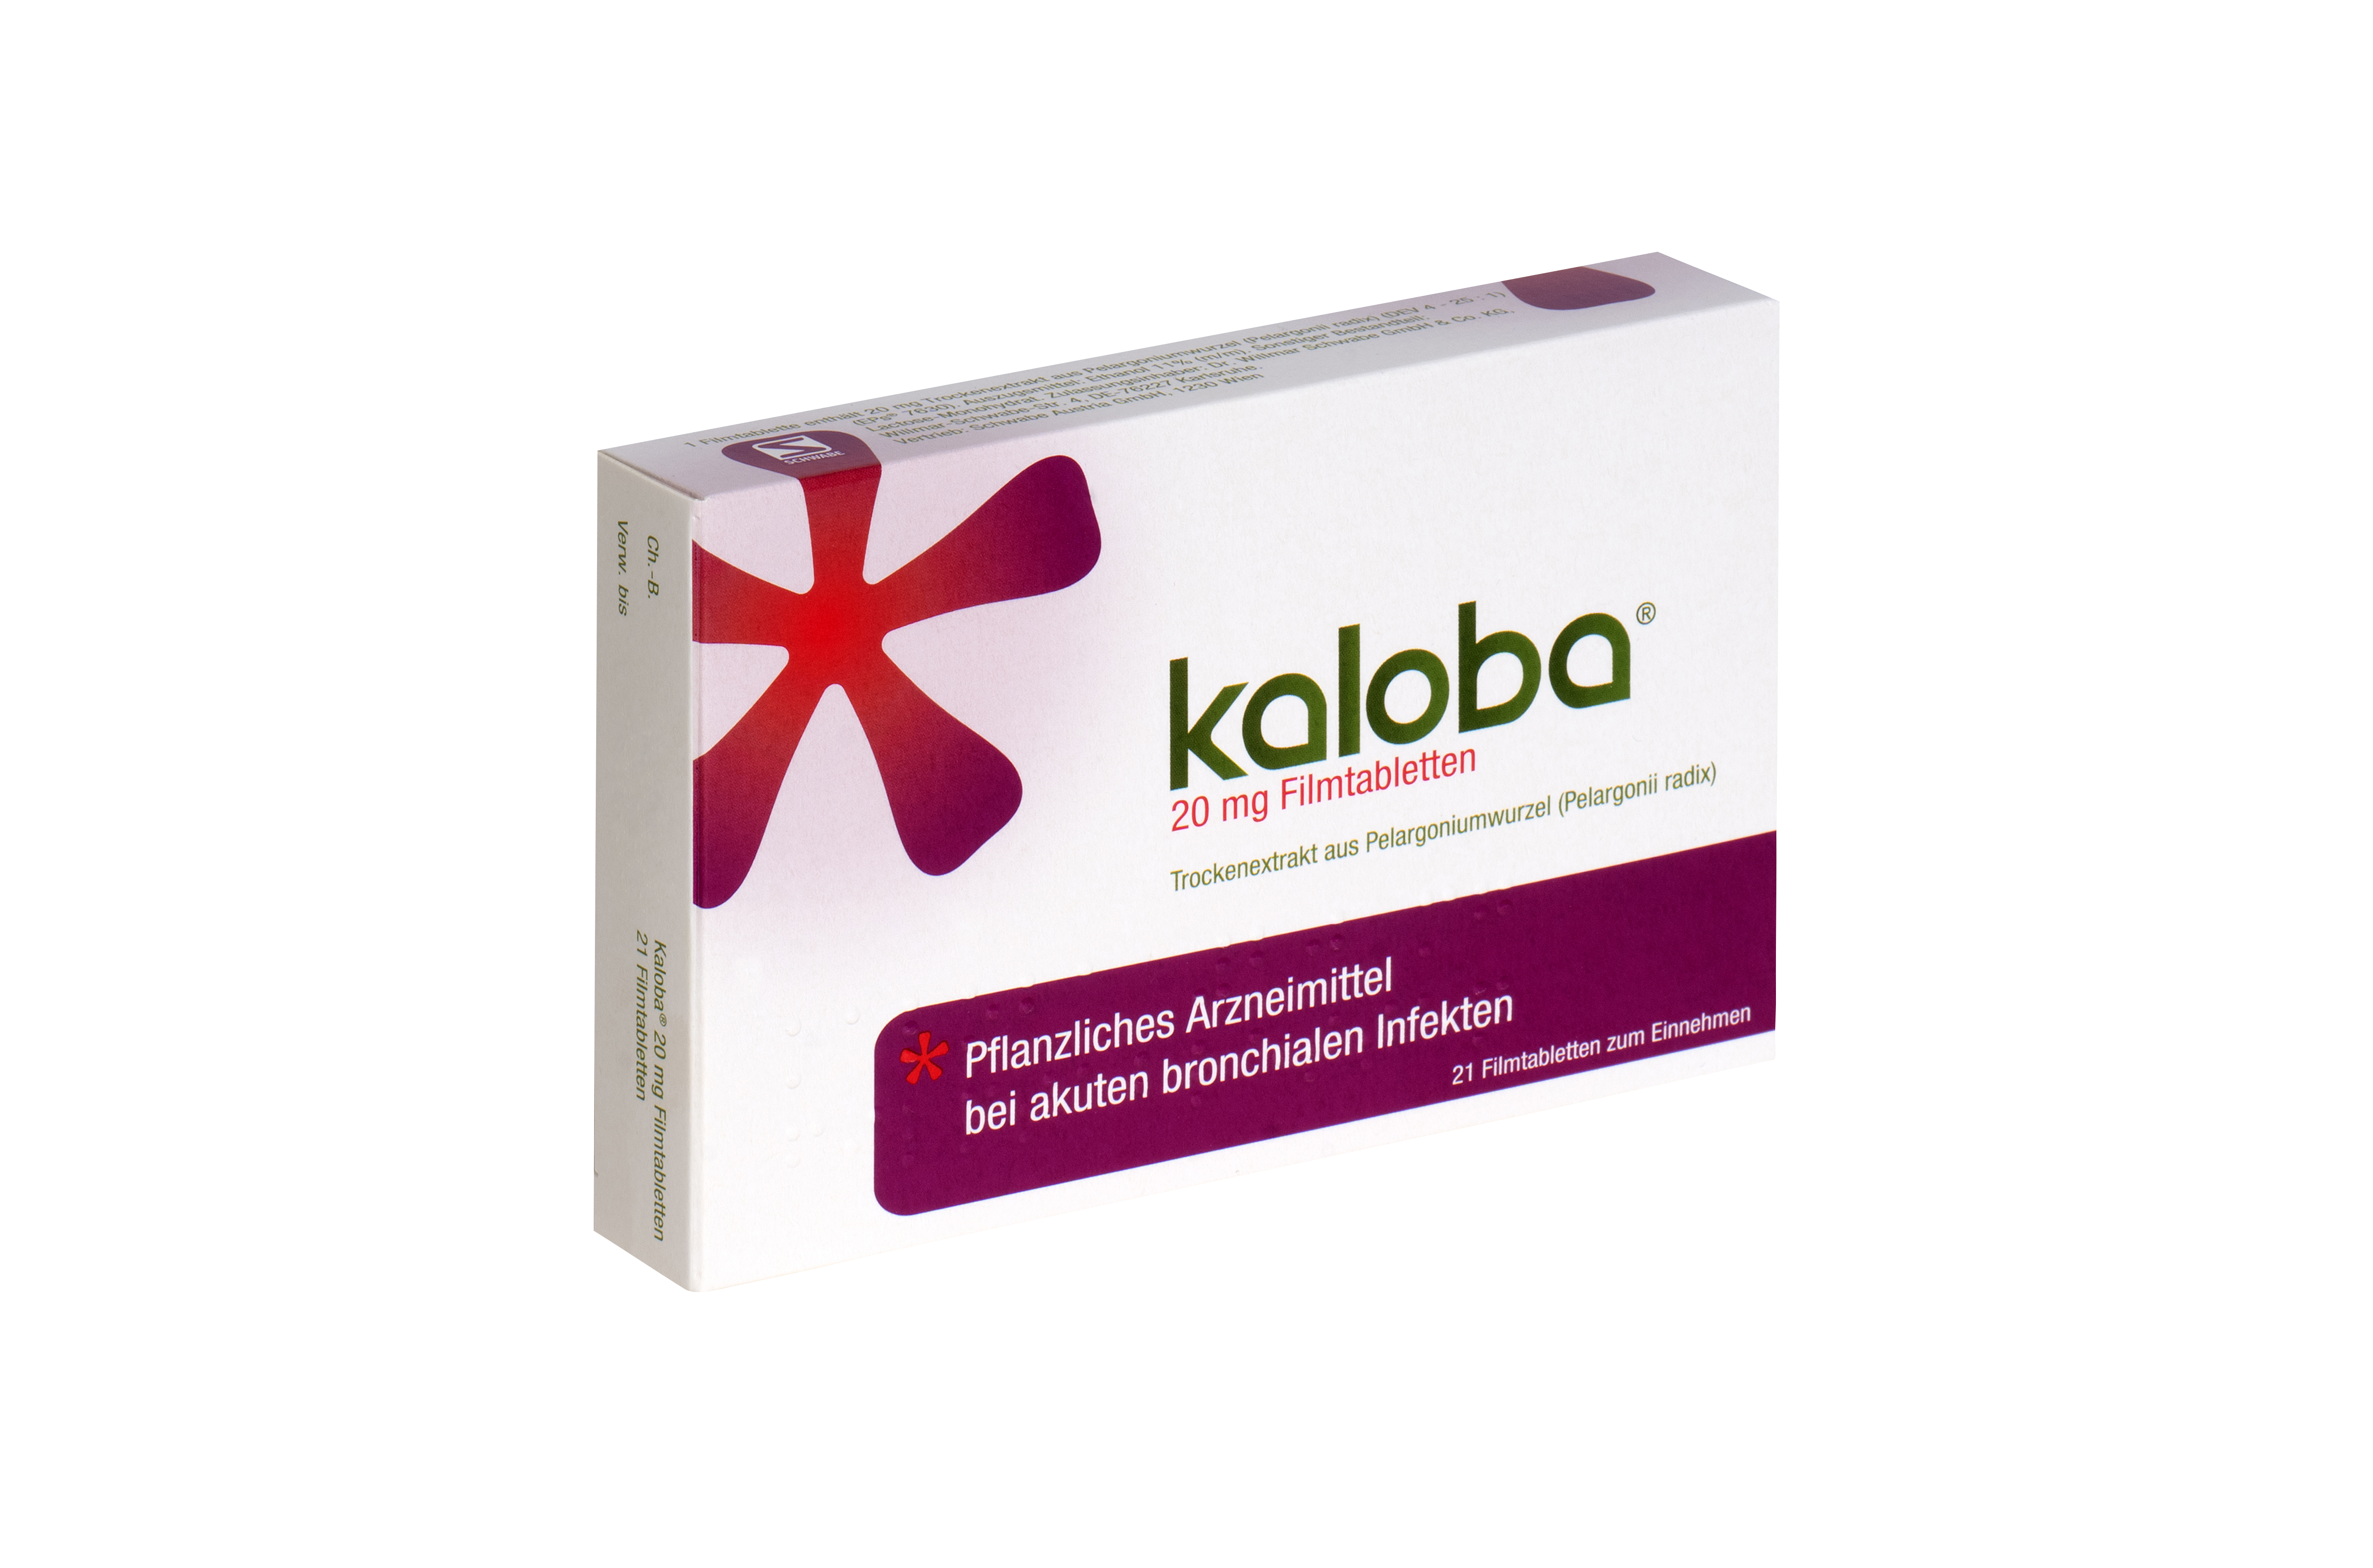 Kaloba® 20 mg Filmtabletten